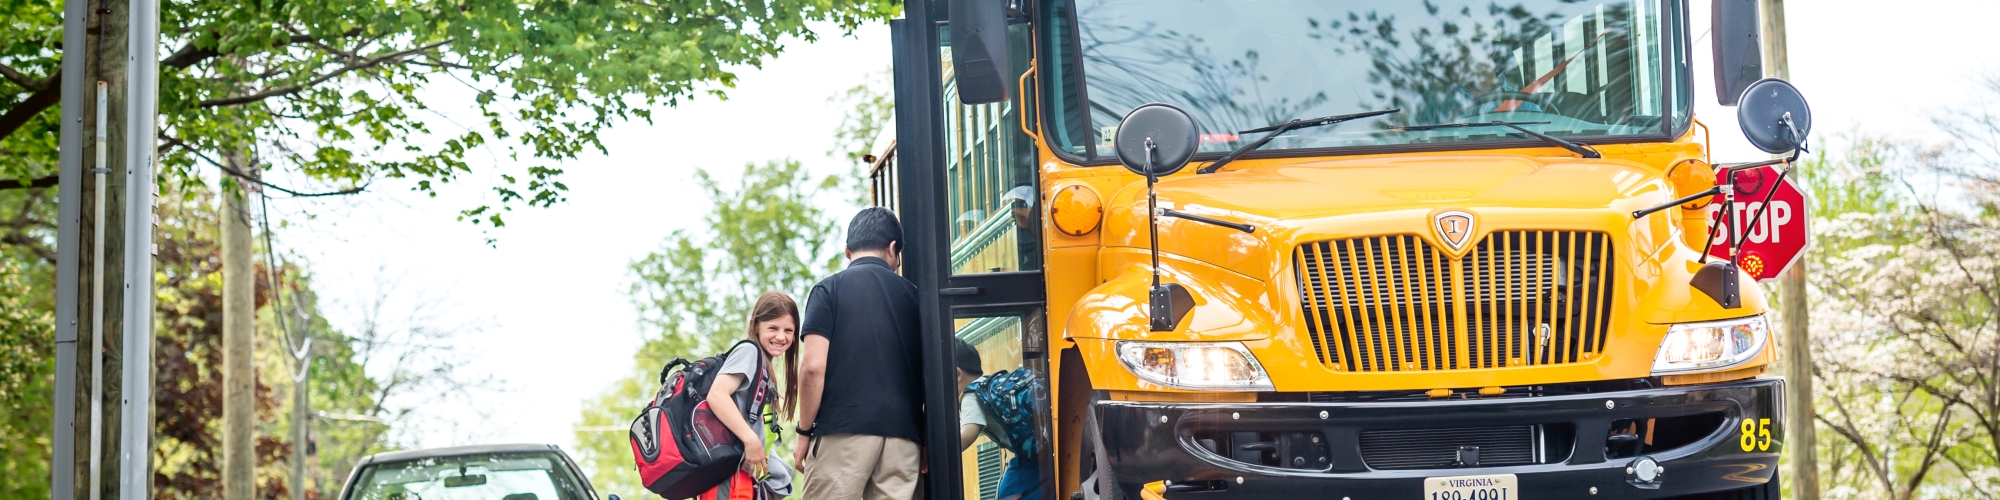 School Bus Loading Children